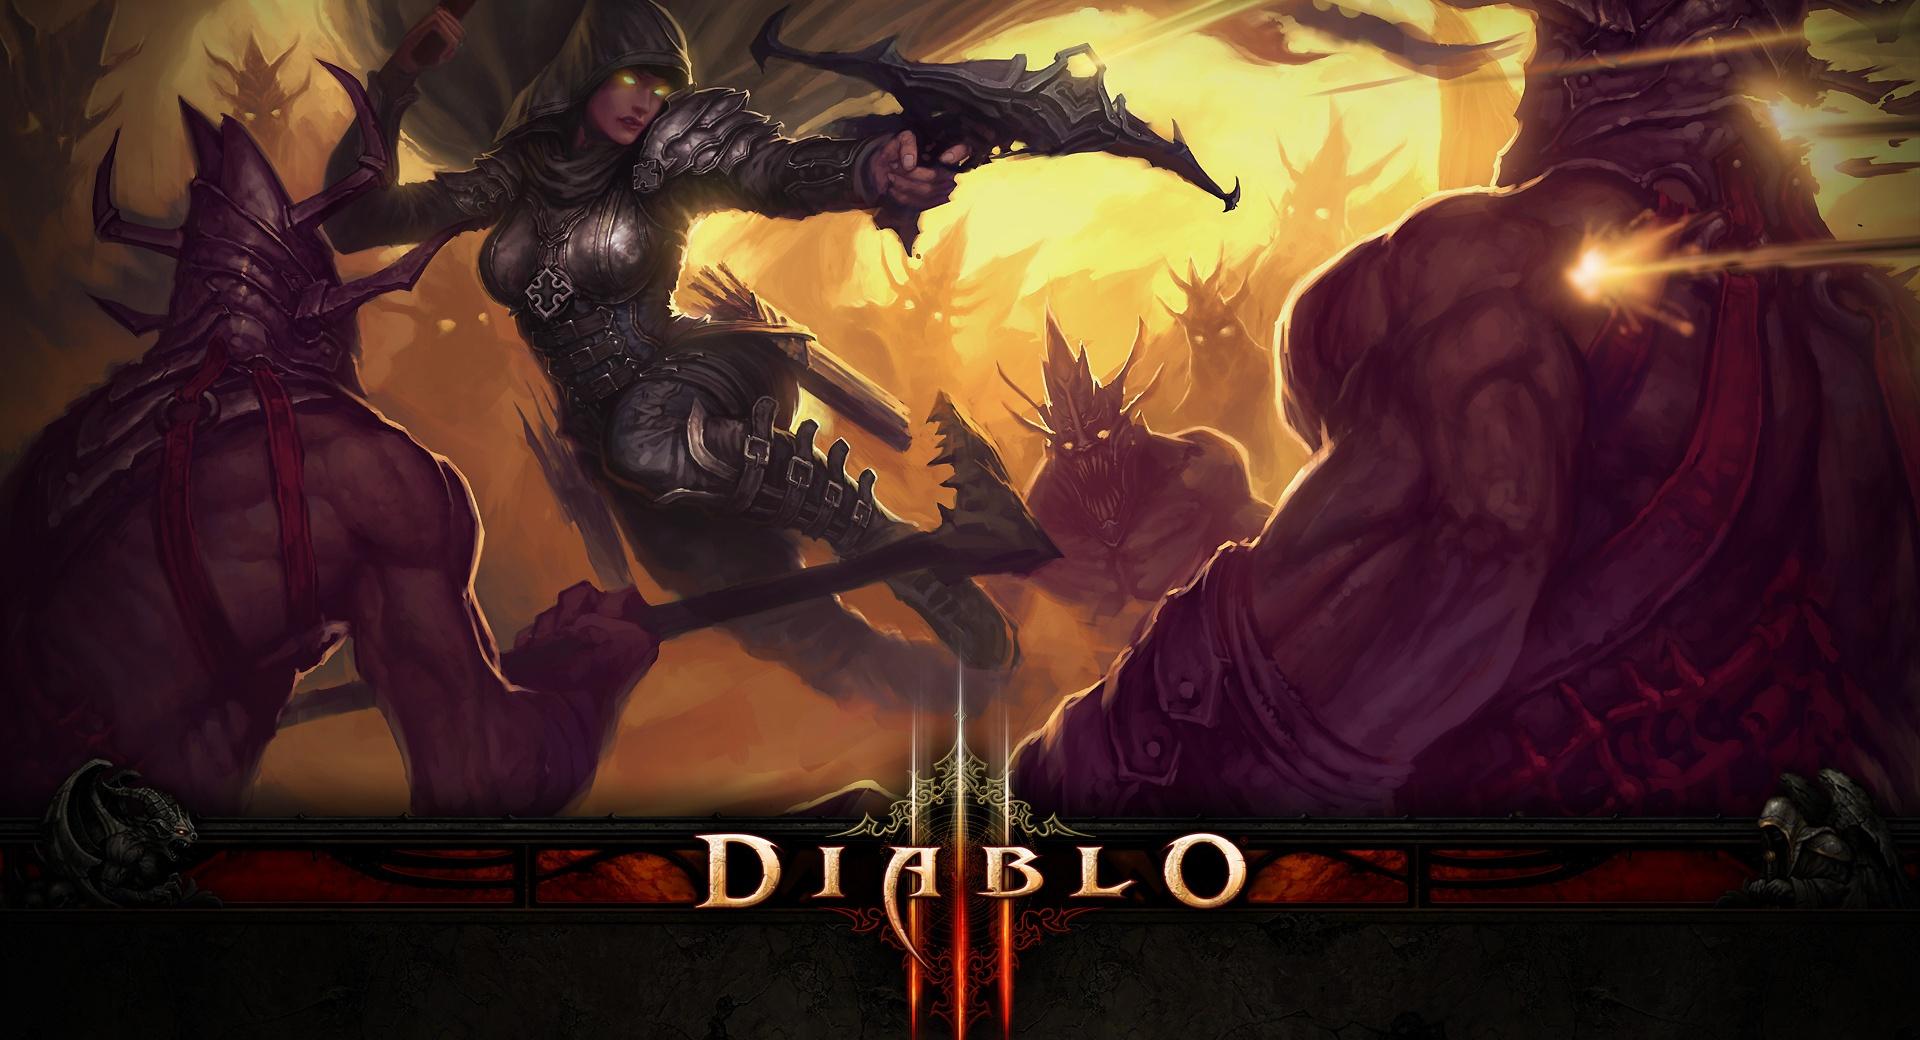 Diablo III Demon Hunter at 1600 x 1200 size wallpapers HD quality